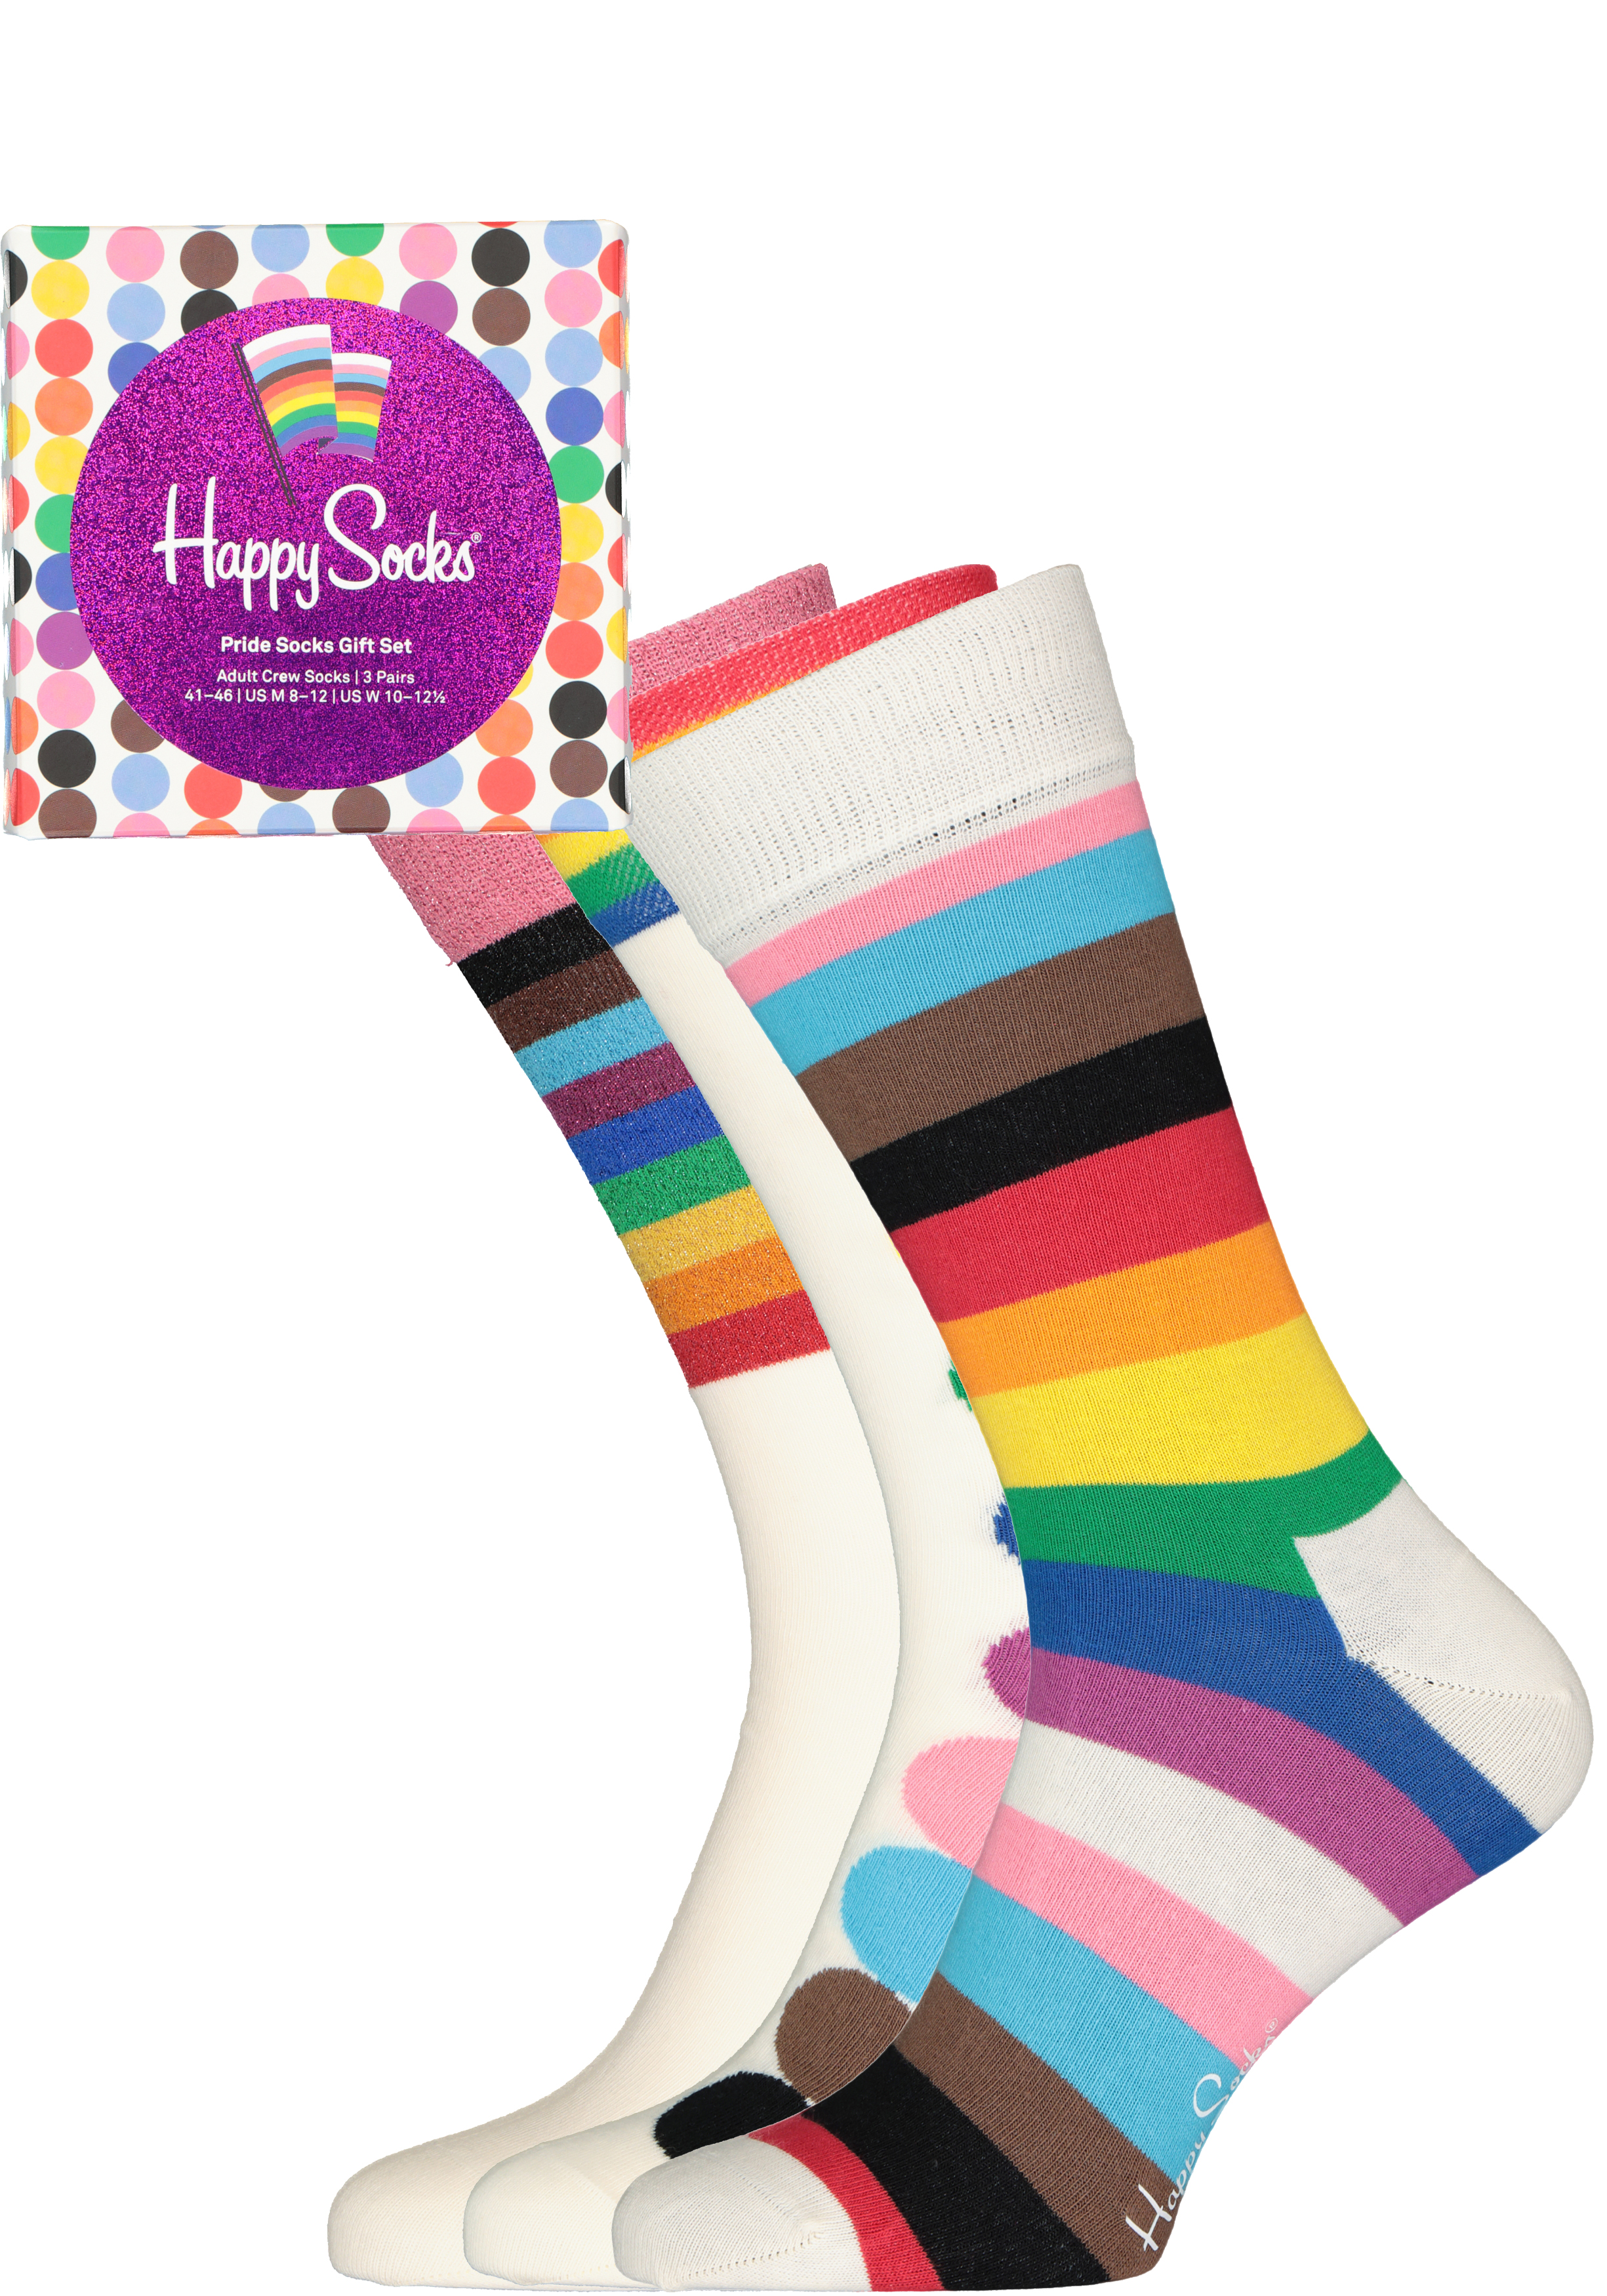 Bakkerij Klusjesman Zullen Happy Socks Pride Socks Gift Set (3-pack), regenboog sokken - Zomer SALE  tot 50% korting